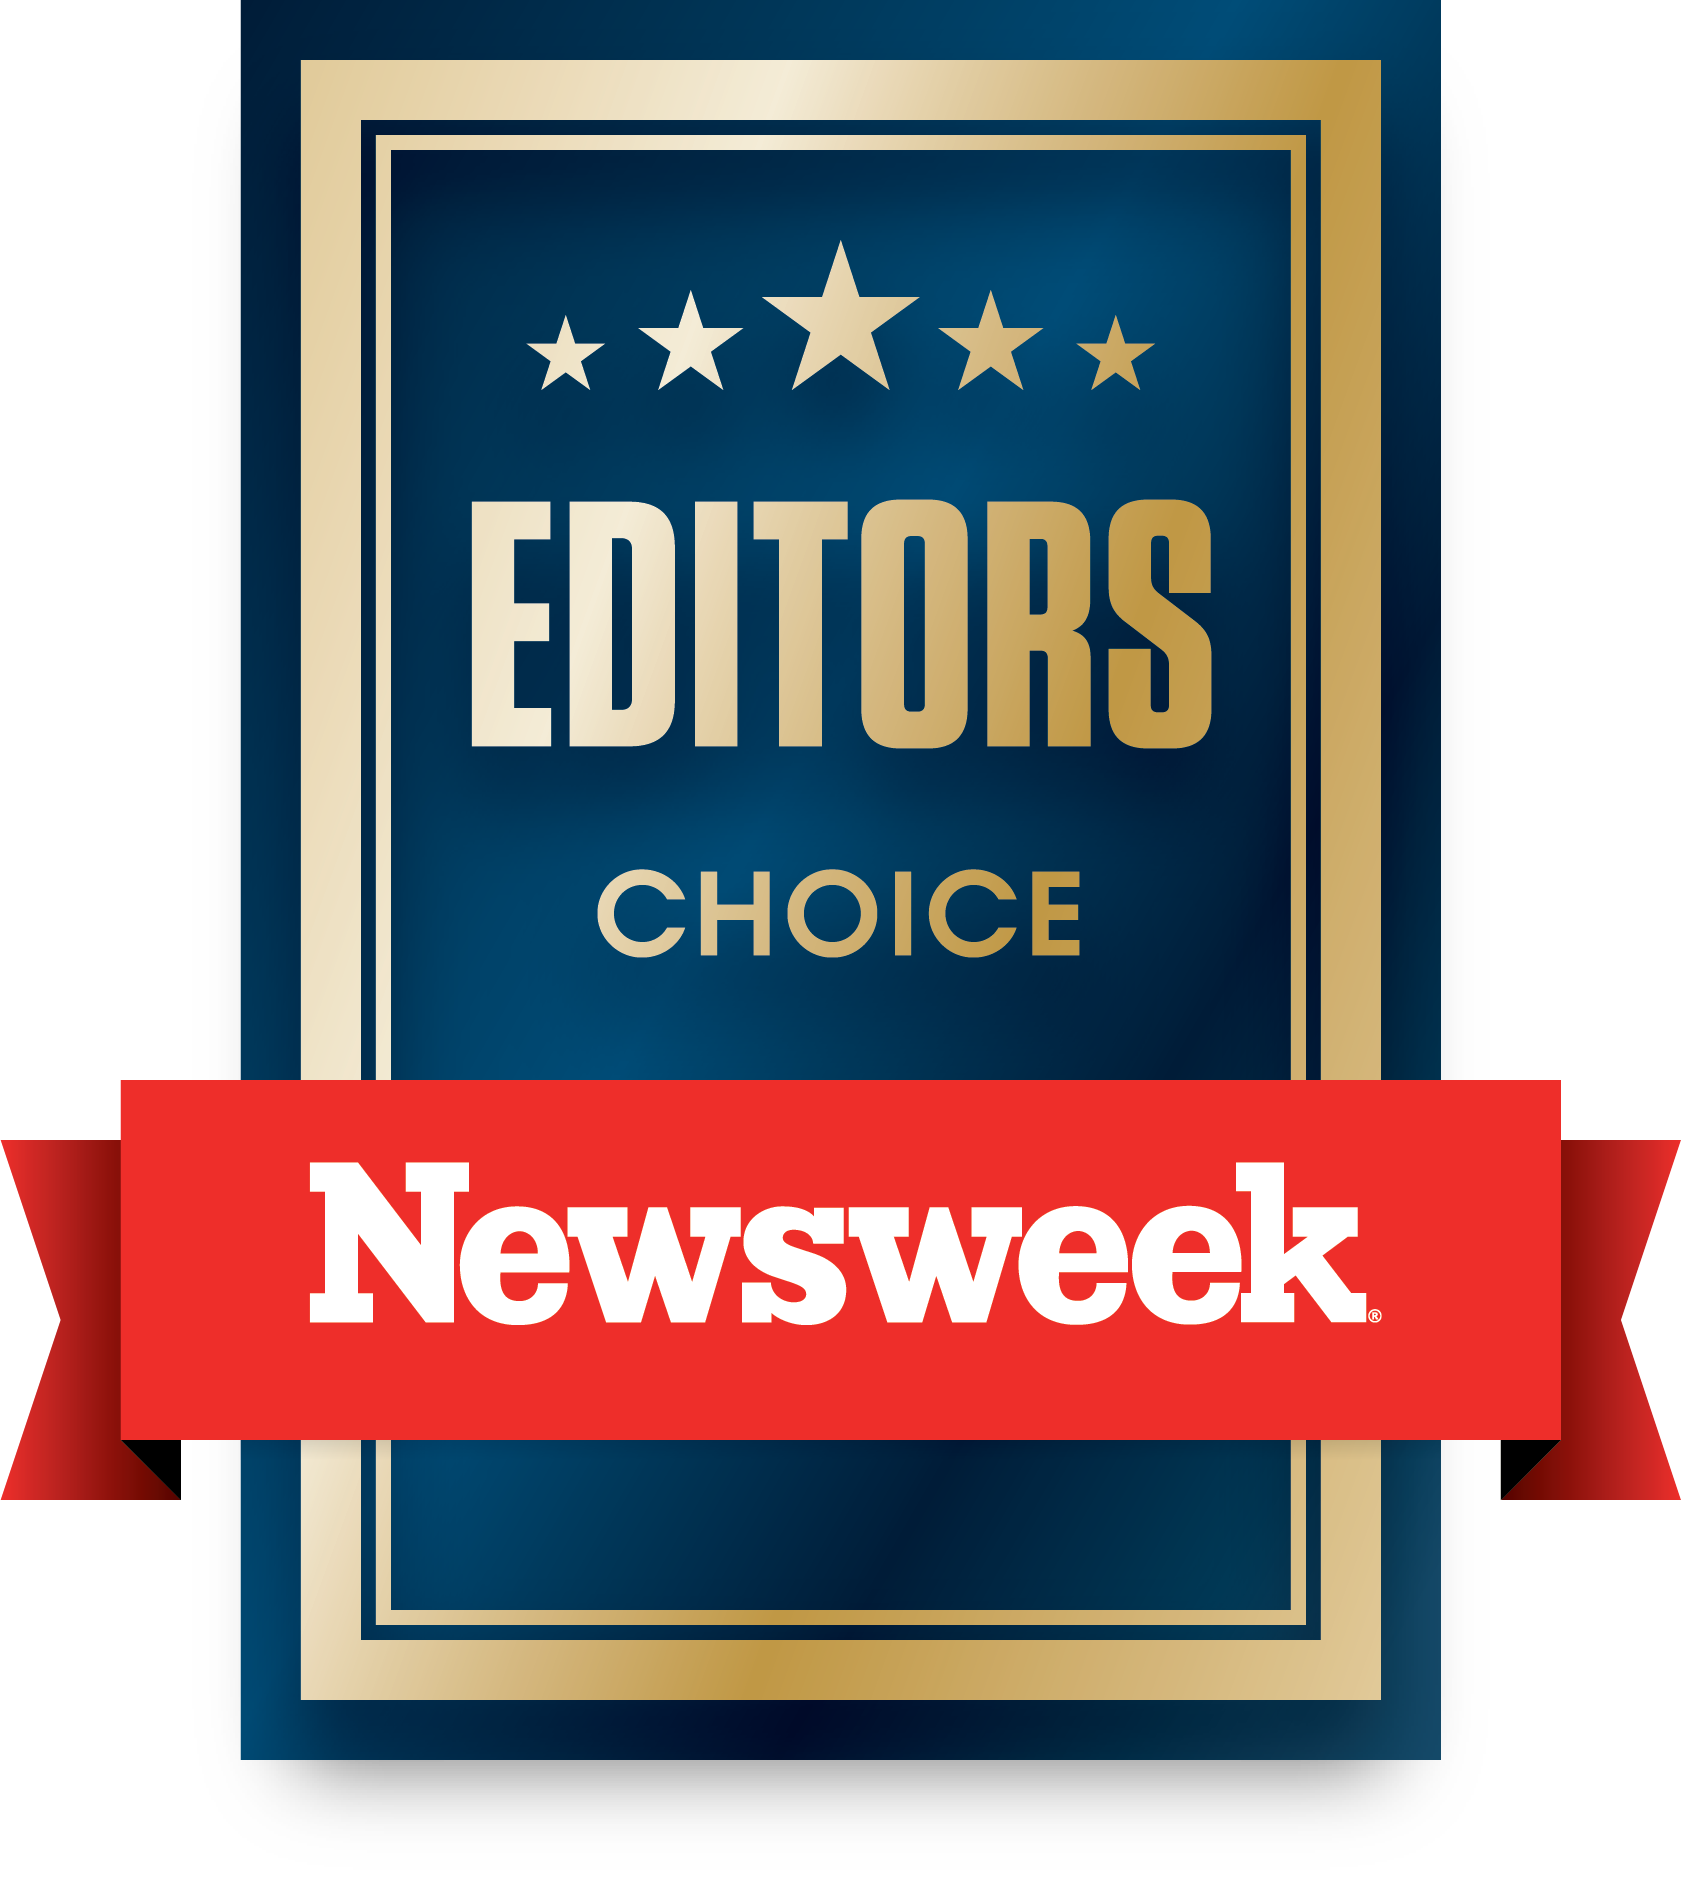 Newsweek Editors Choice